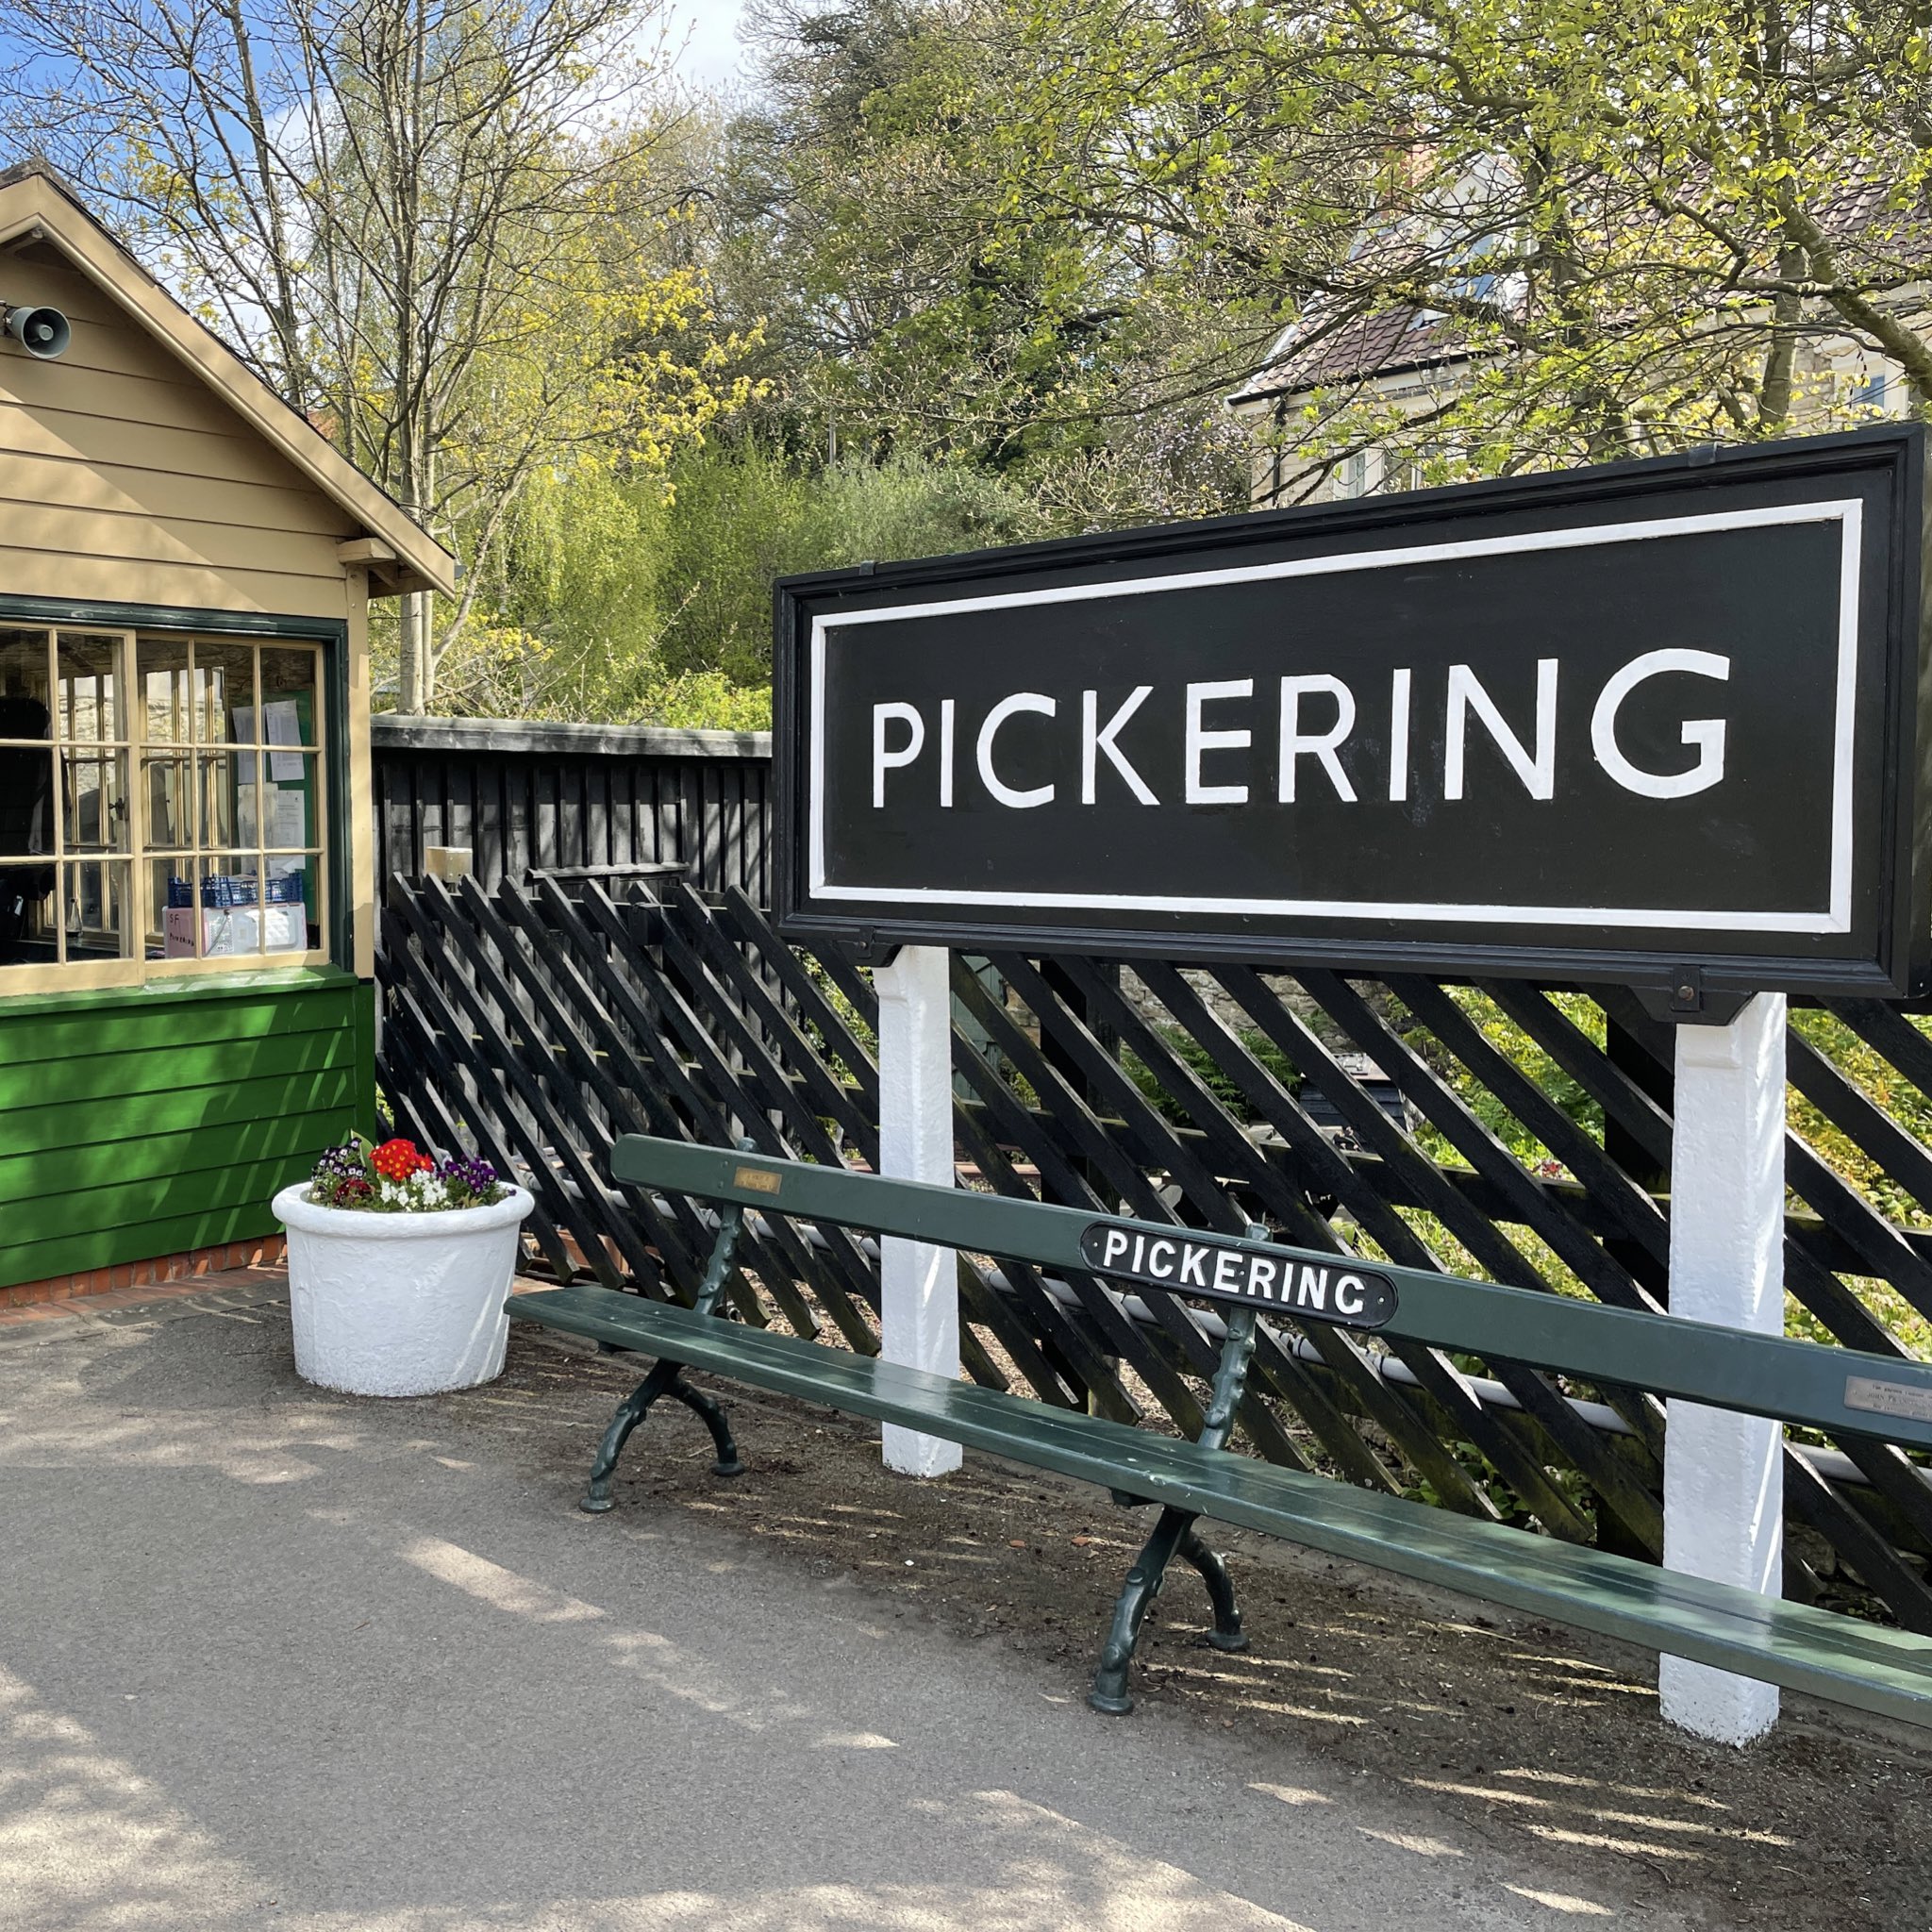 Pickering Station